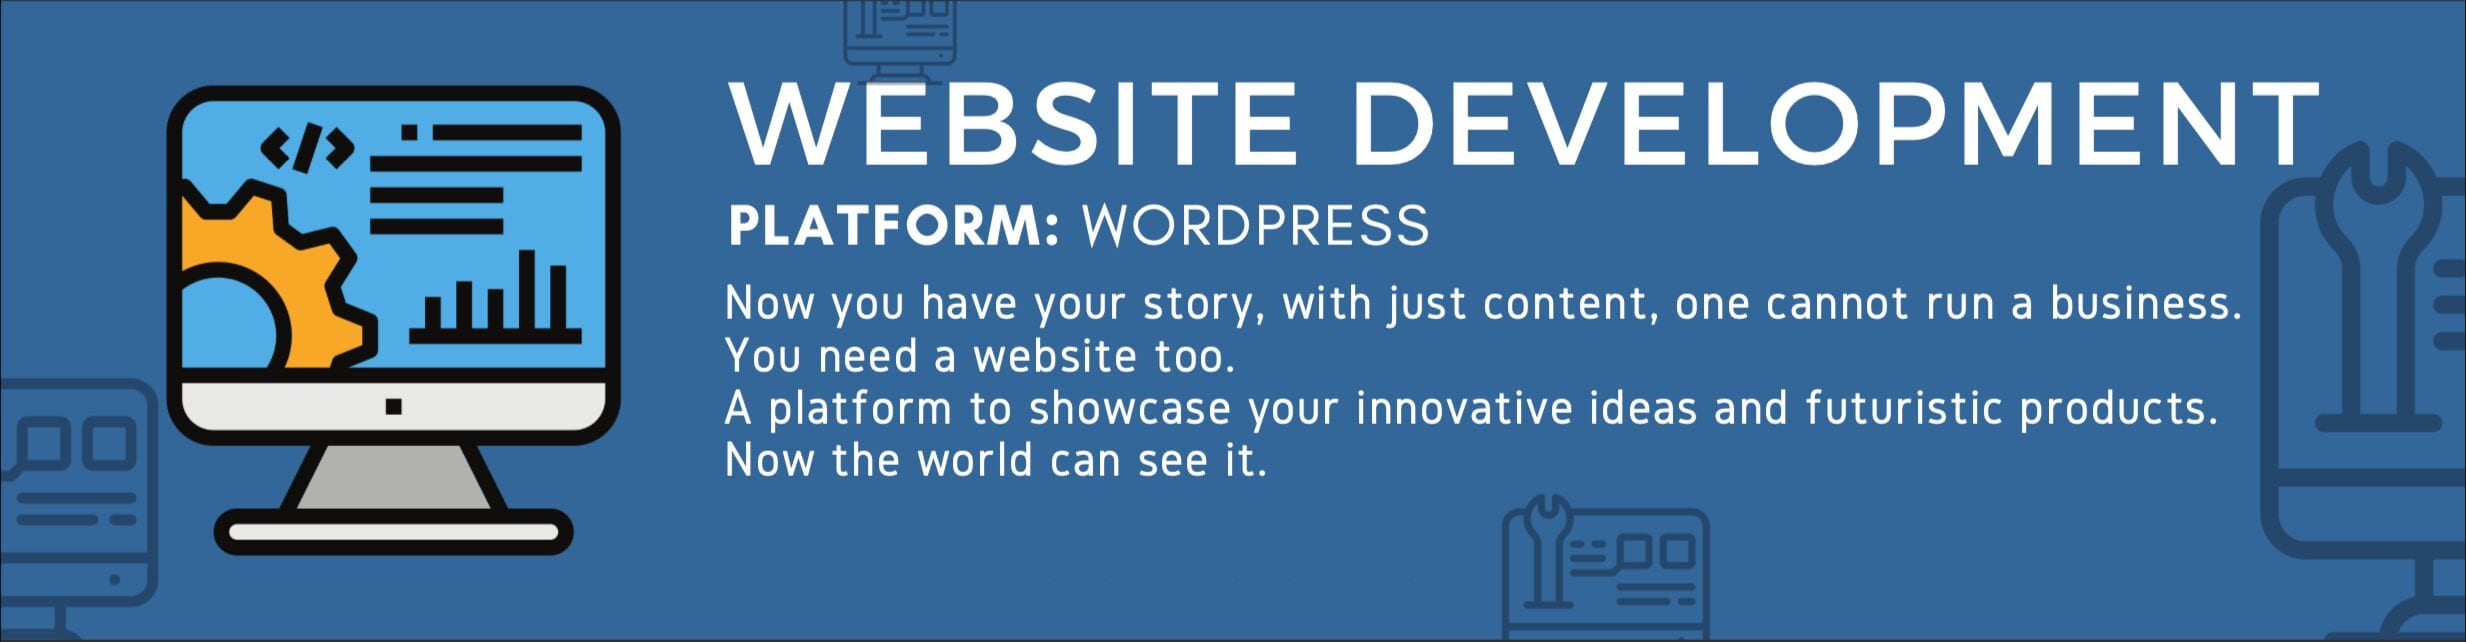 Website Development Description